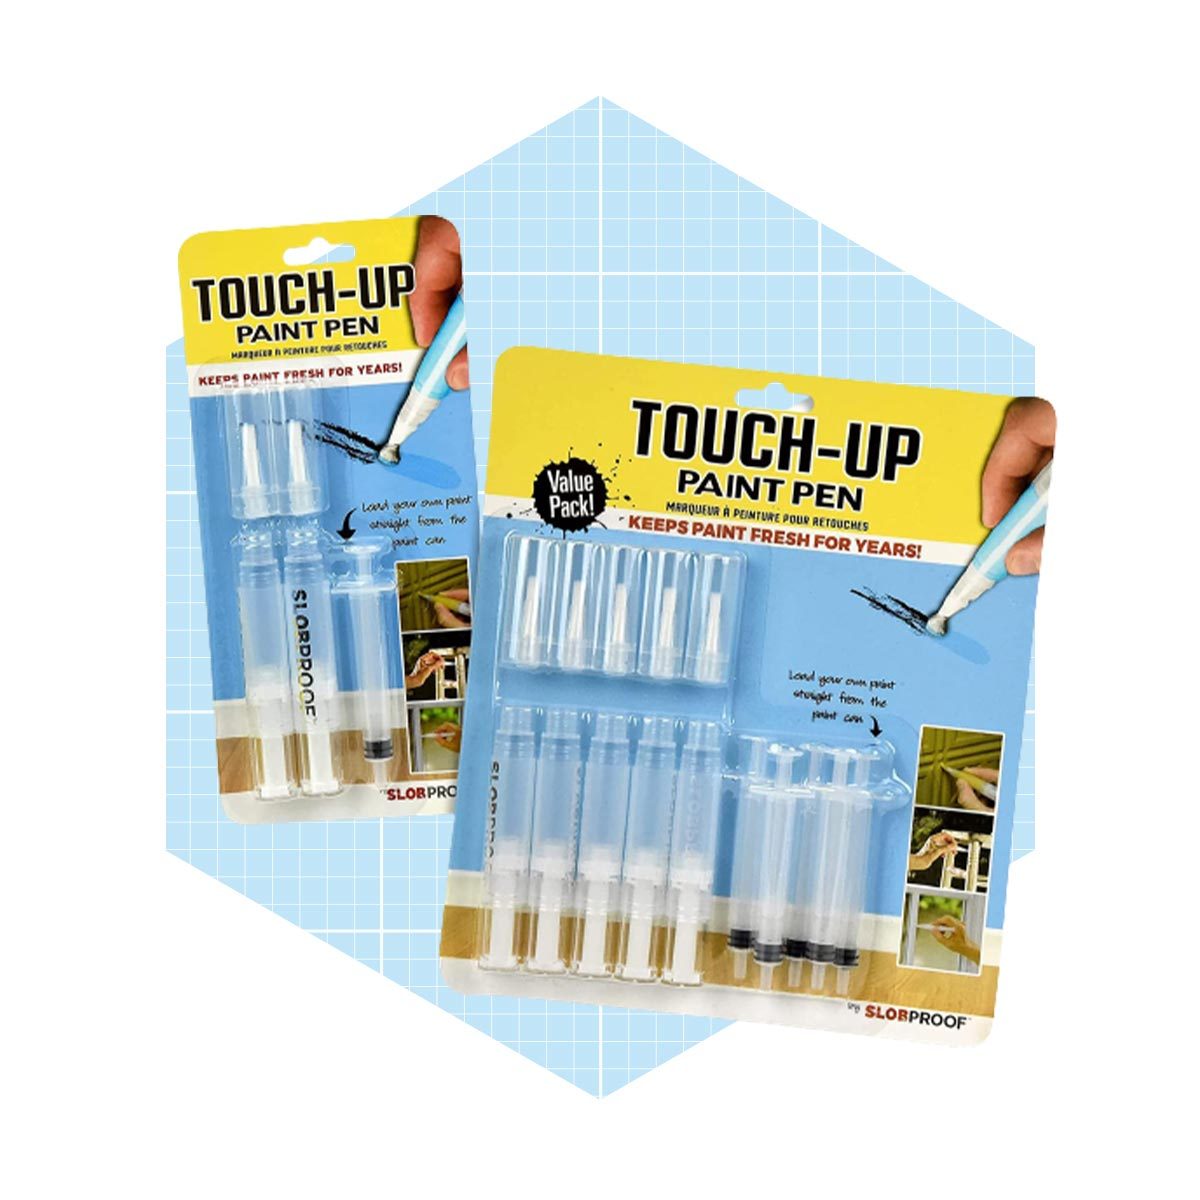 Slobproof Touch Up Paint Pen- Refillable Paint Brush Pens 2 in 1